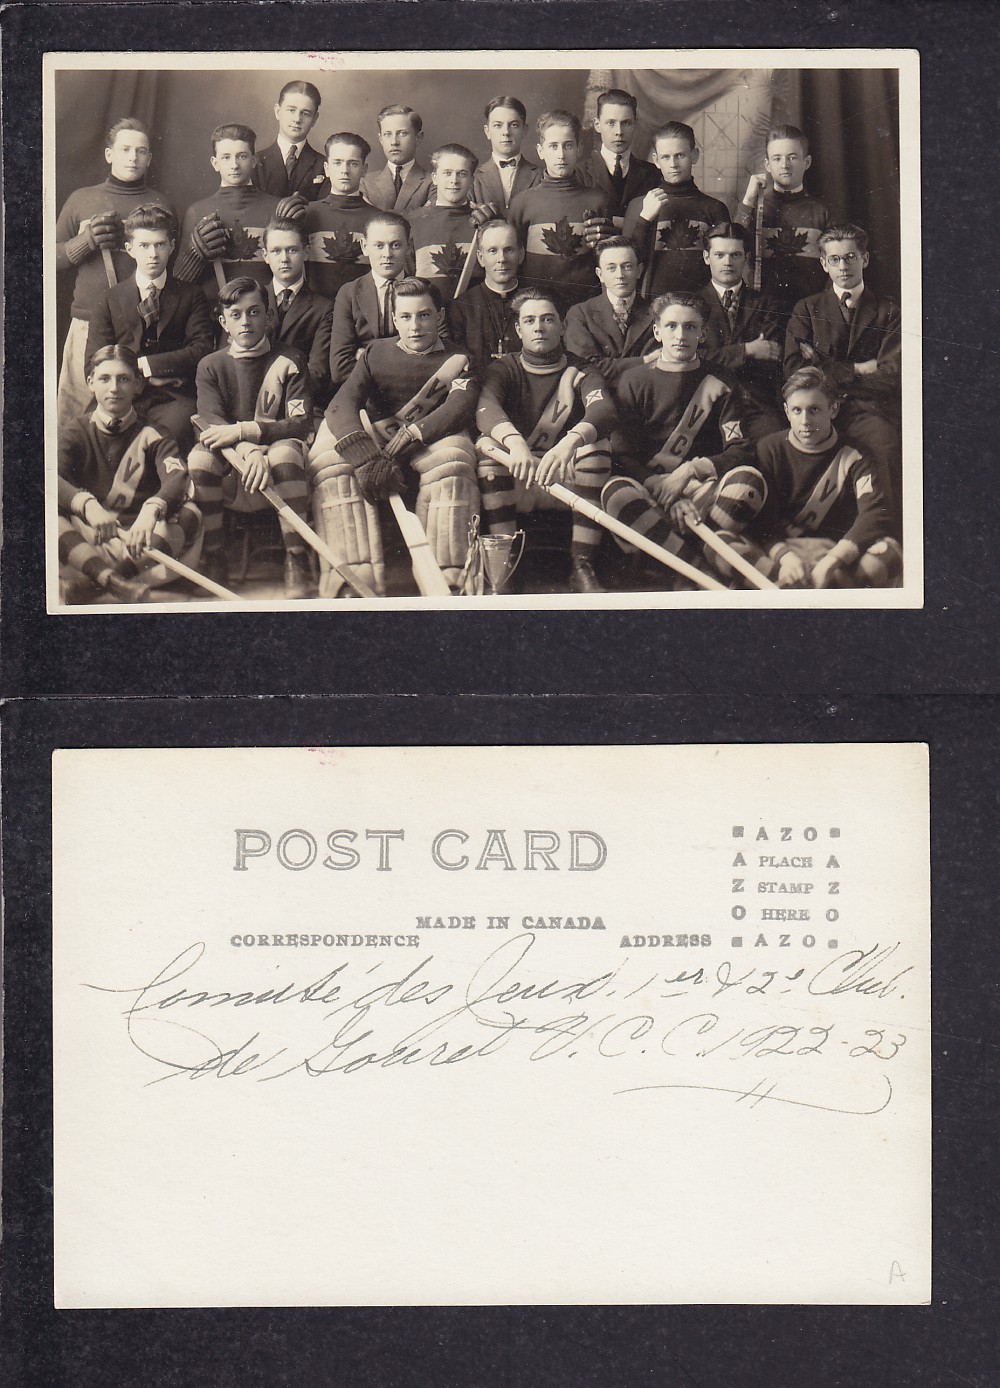 1922-23 VICTORIAVILLE HOCKEY TEAM POST CARD photo